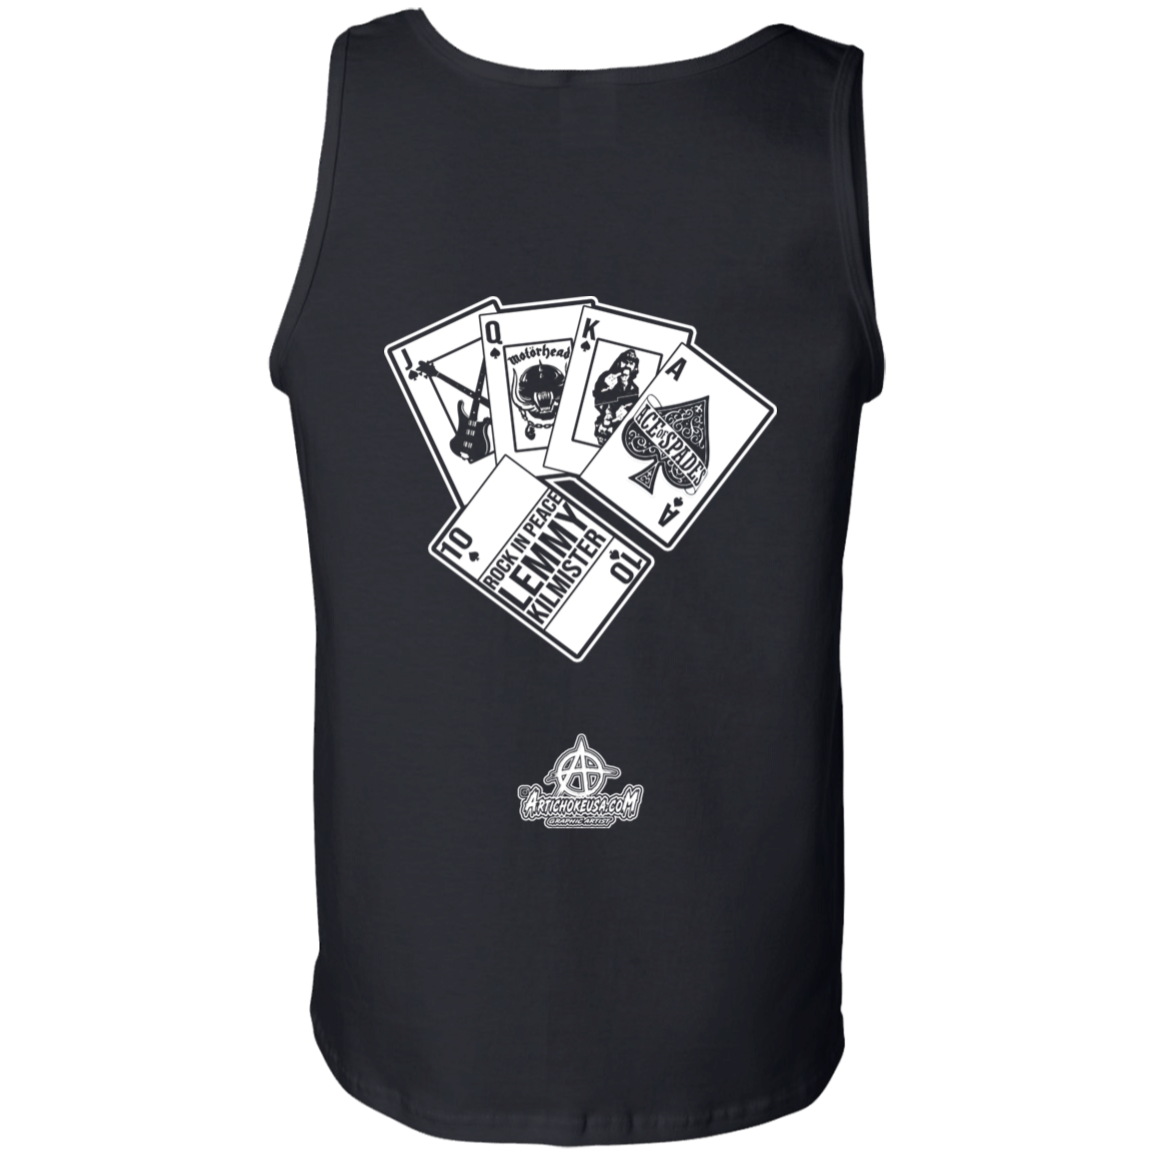 ArtichokeUSA Custom Design. Lemmy Kilmister "Ace of Spades" Tribute Fan Art Version 2 of 2. 100% Cotton Tank Top